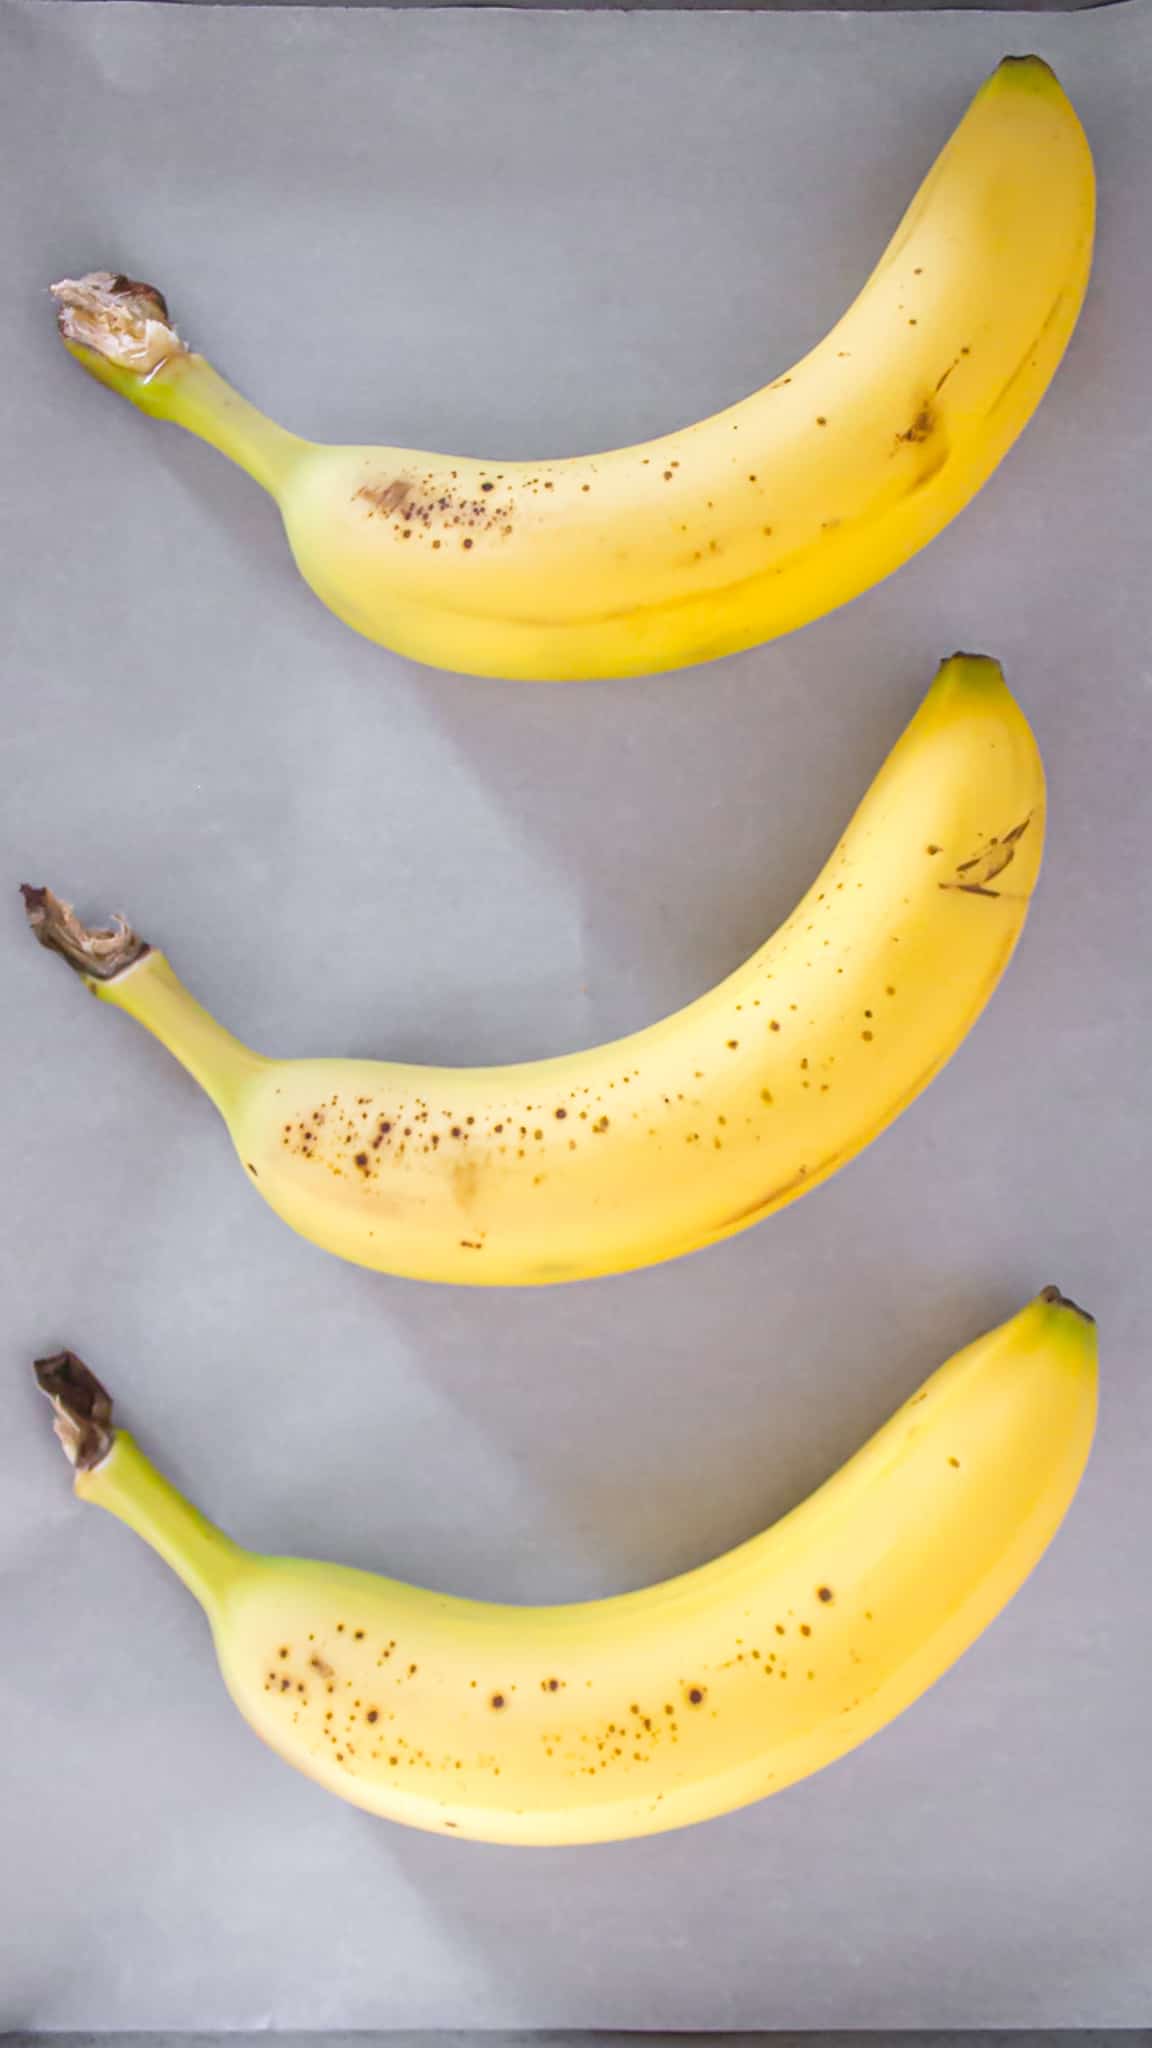 Three unripened bananas on a baking sheet